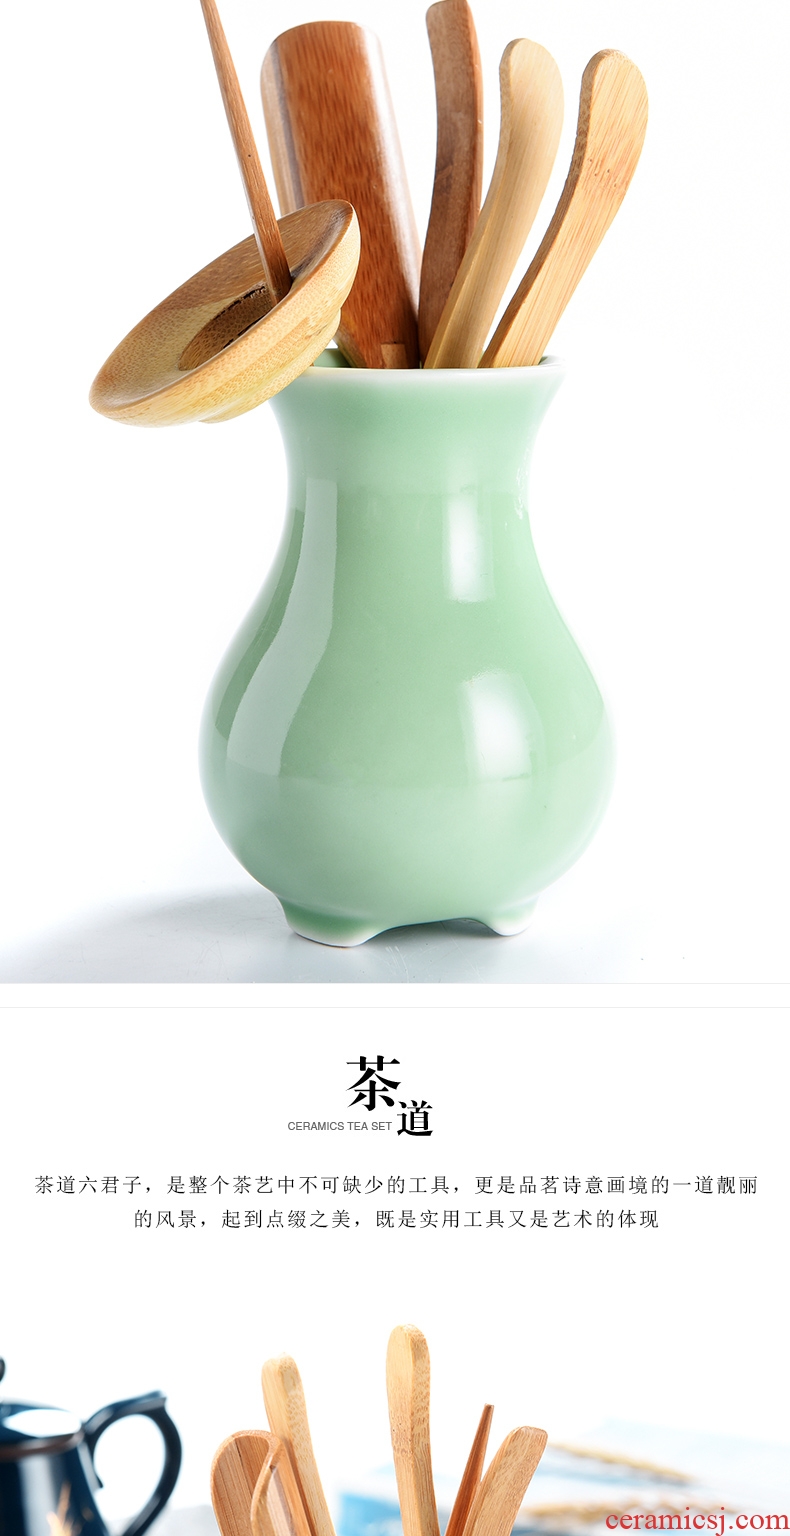 Beauty cabinet black pottery tea six gentleman kung fu tea tea art ceramics fittings ChaGa suit wood clamp ChaZhen bamboo clip